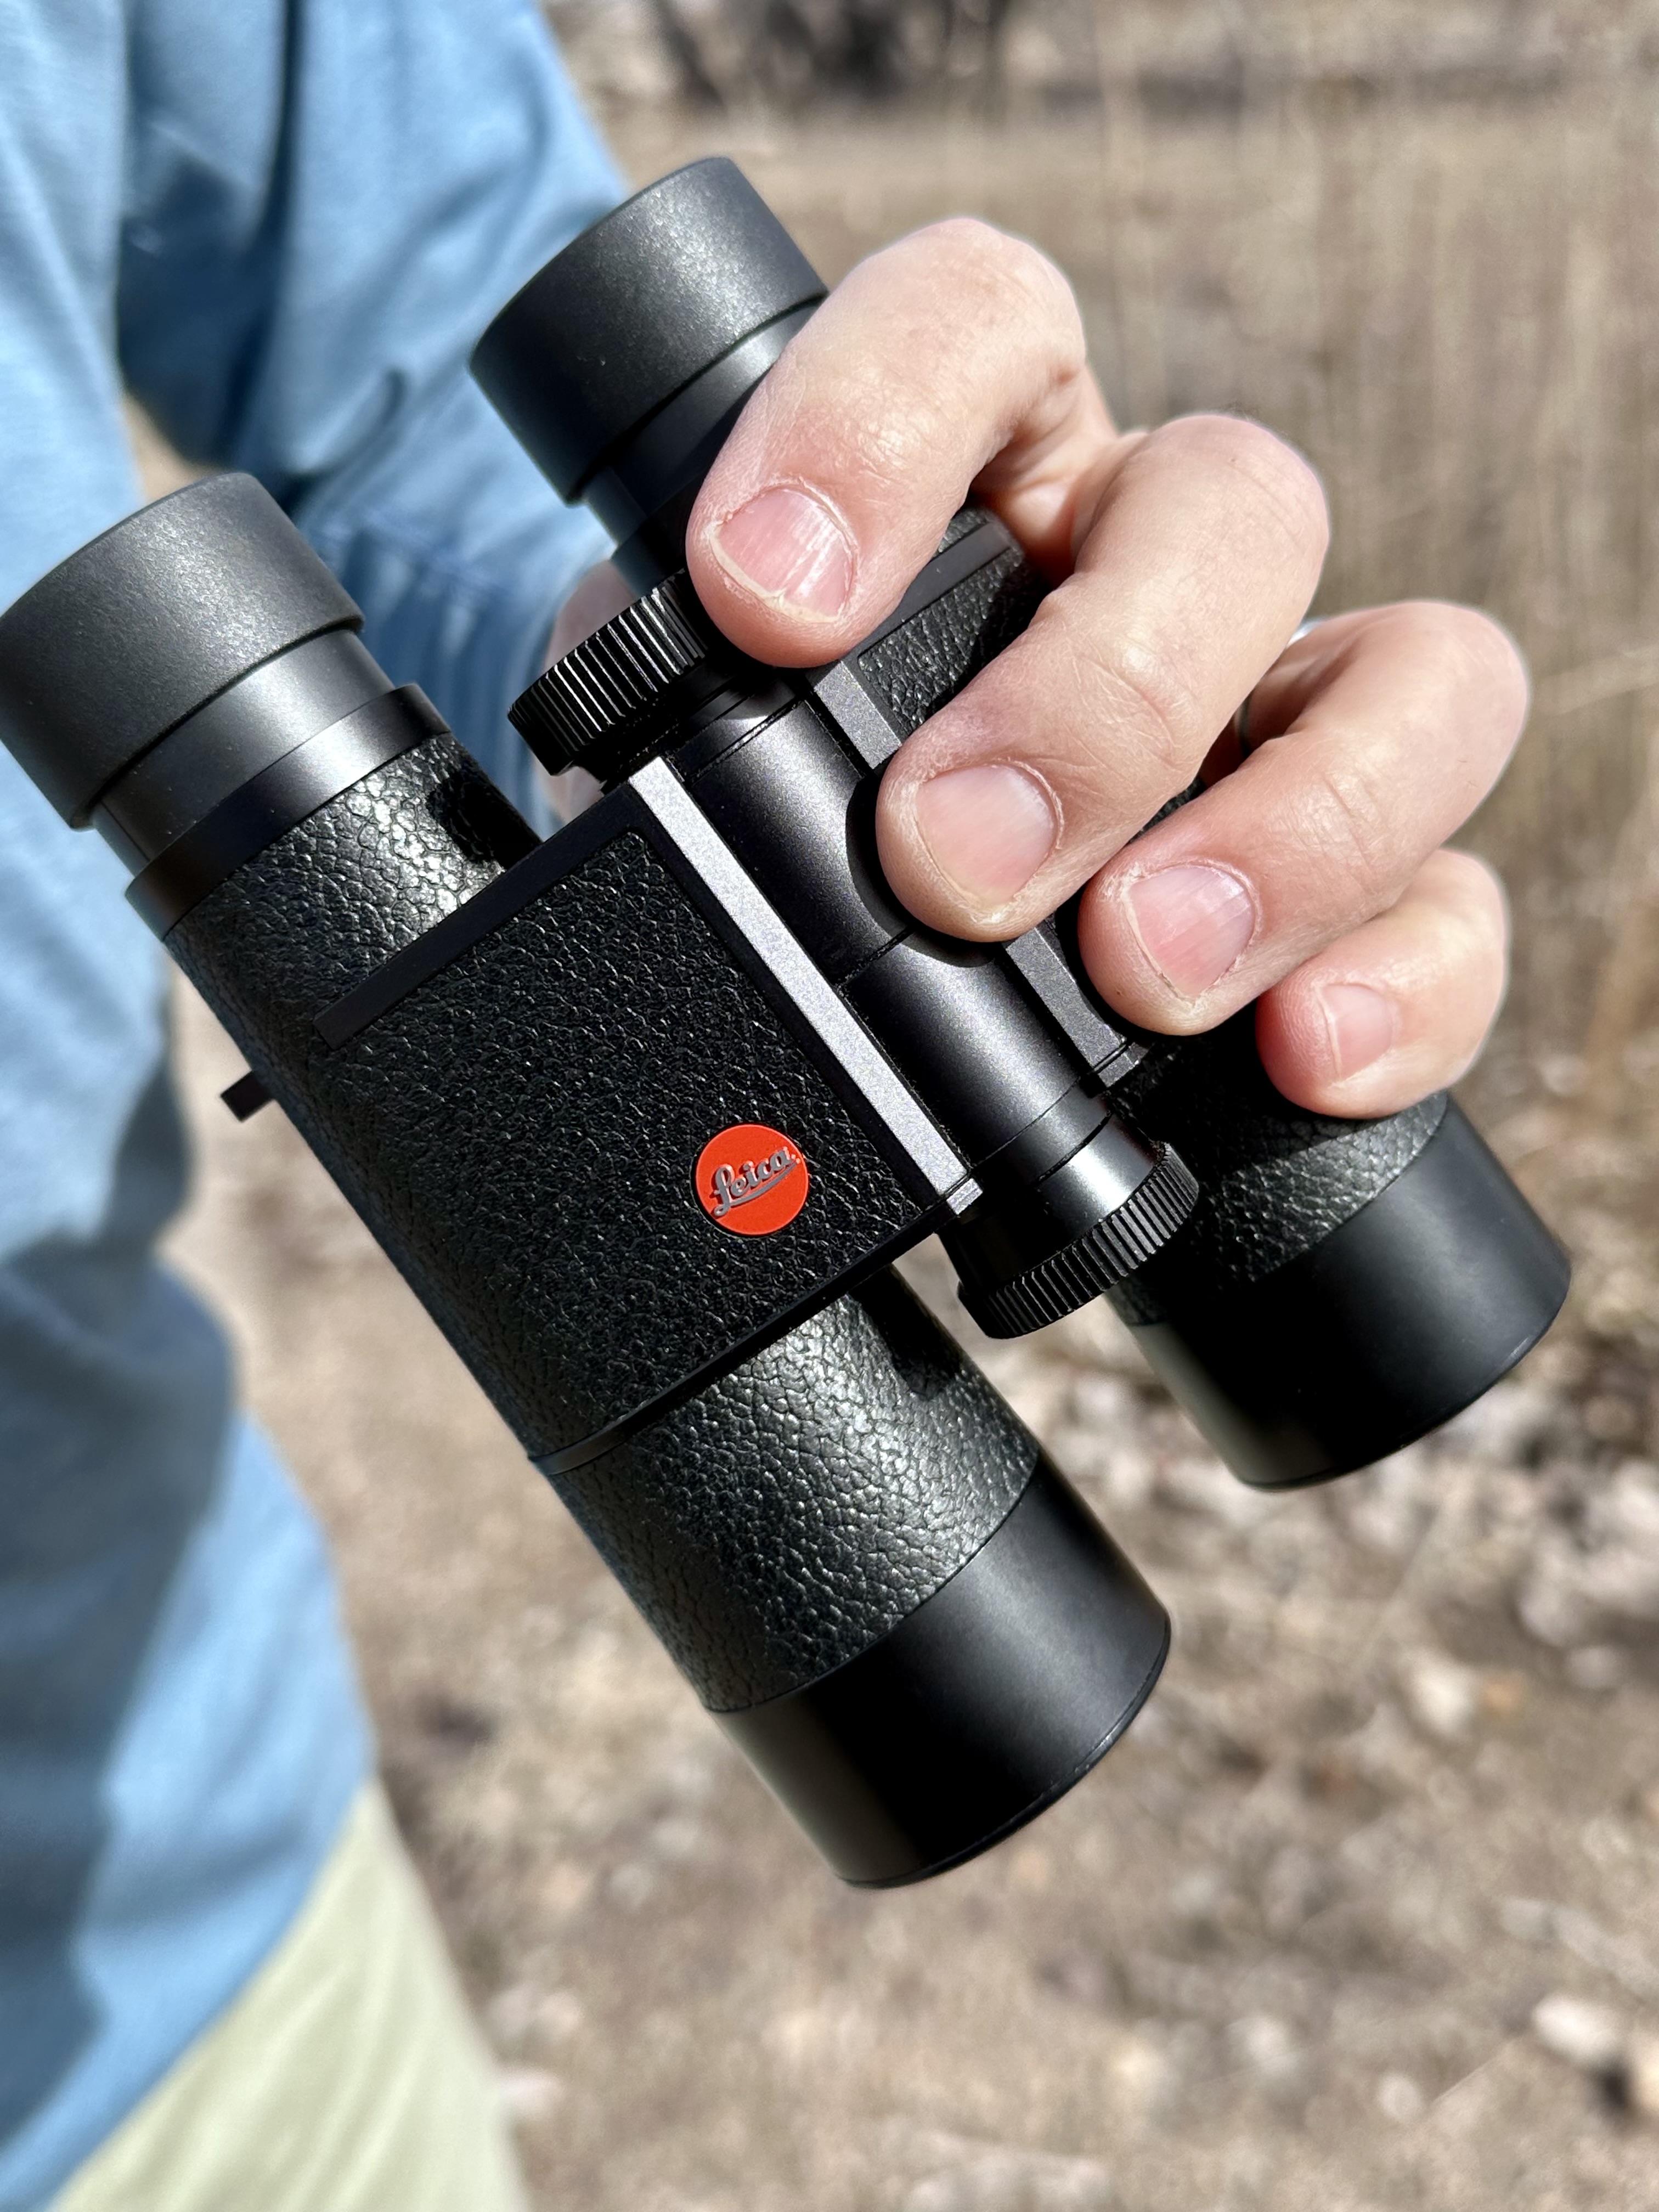 Leica Trinovid travel binoculars in use. 